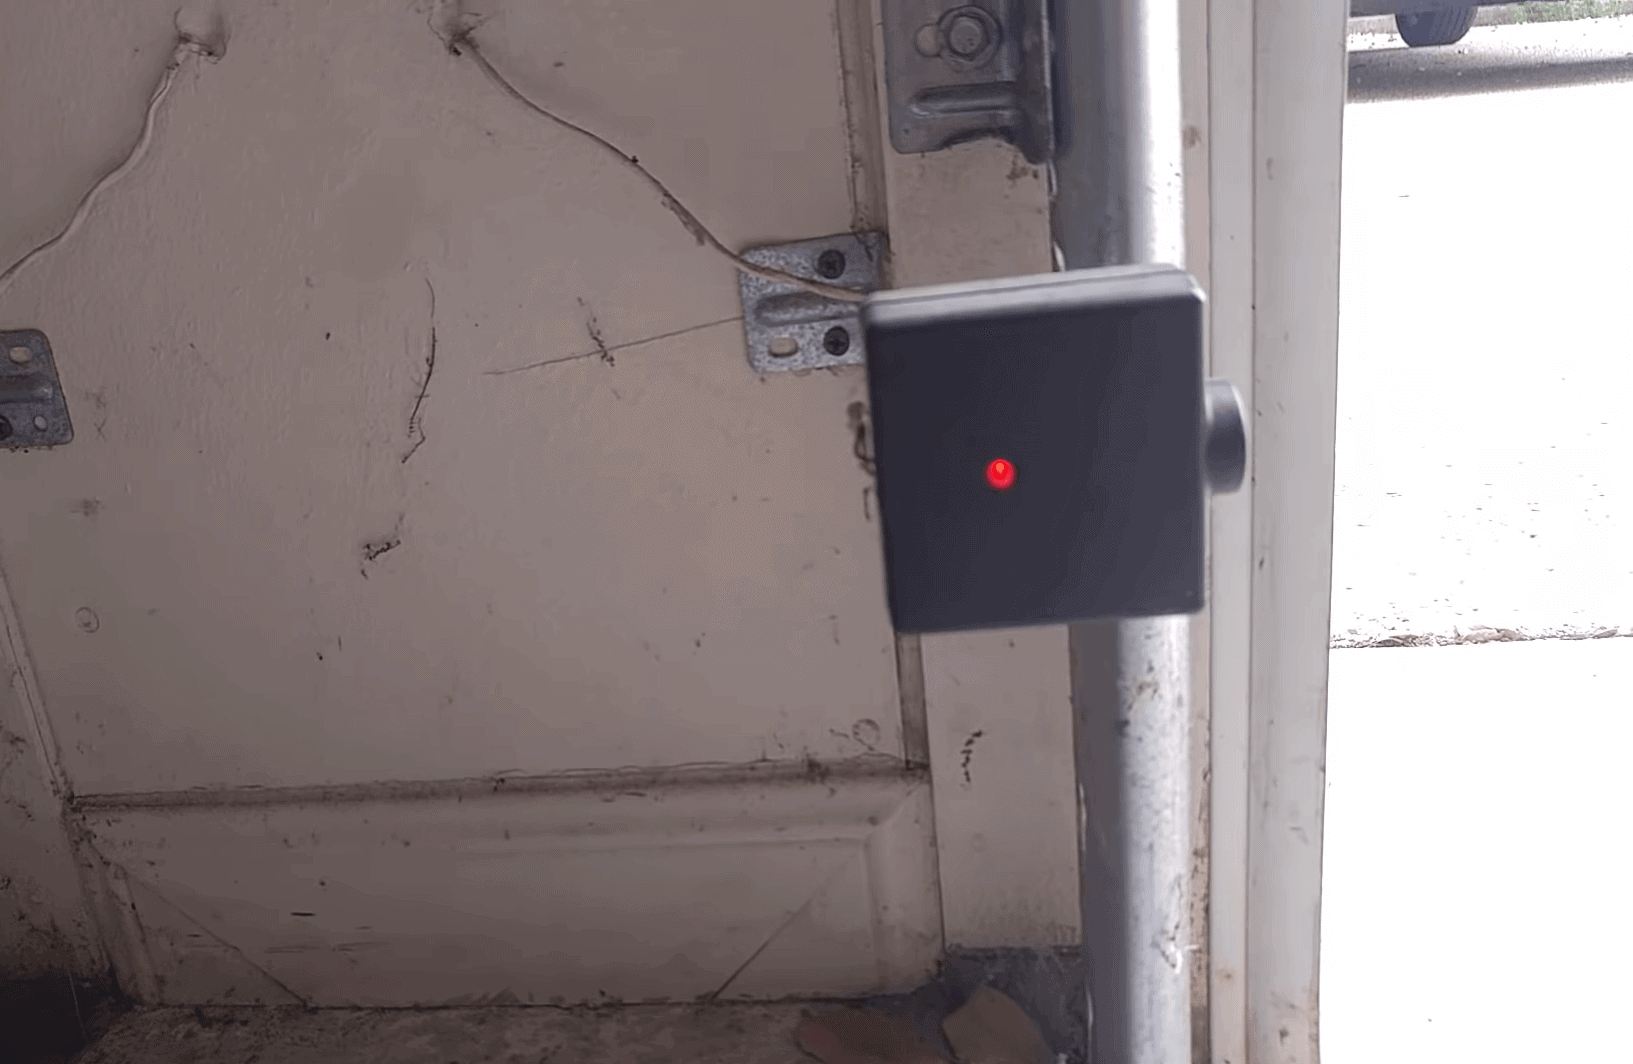 Understanding Why Genie Garage Door Red Light Stays On: Illuminating Solutions